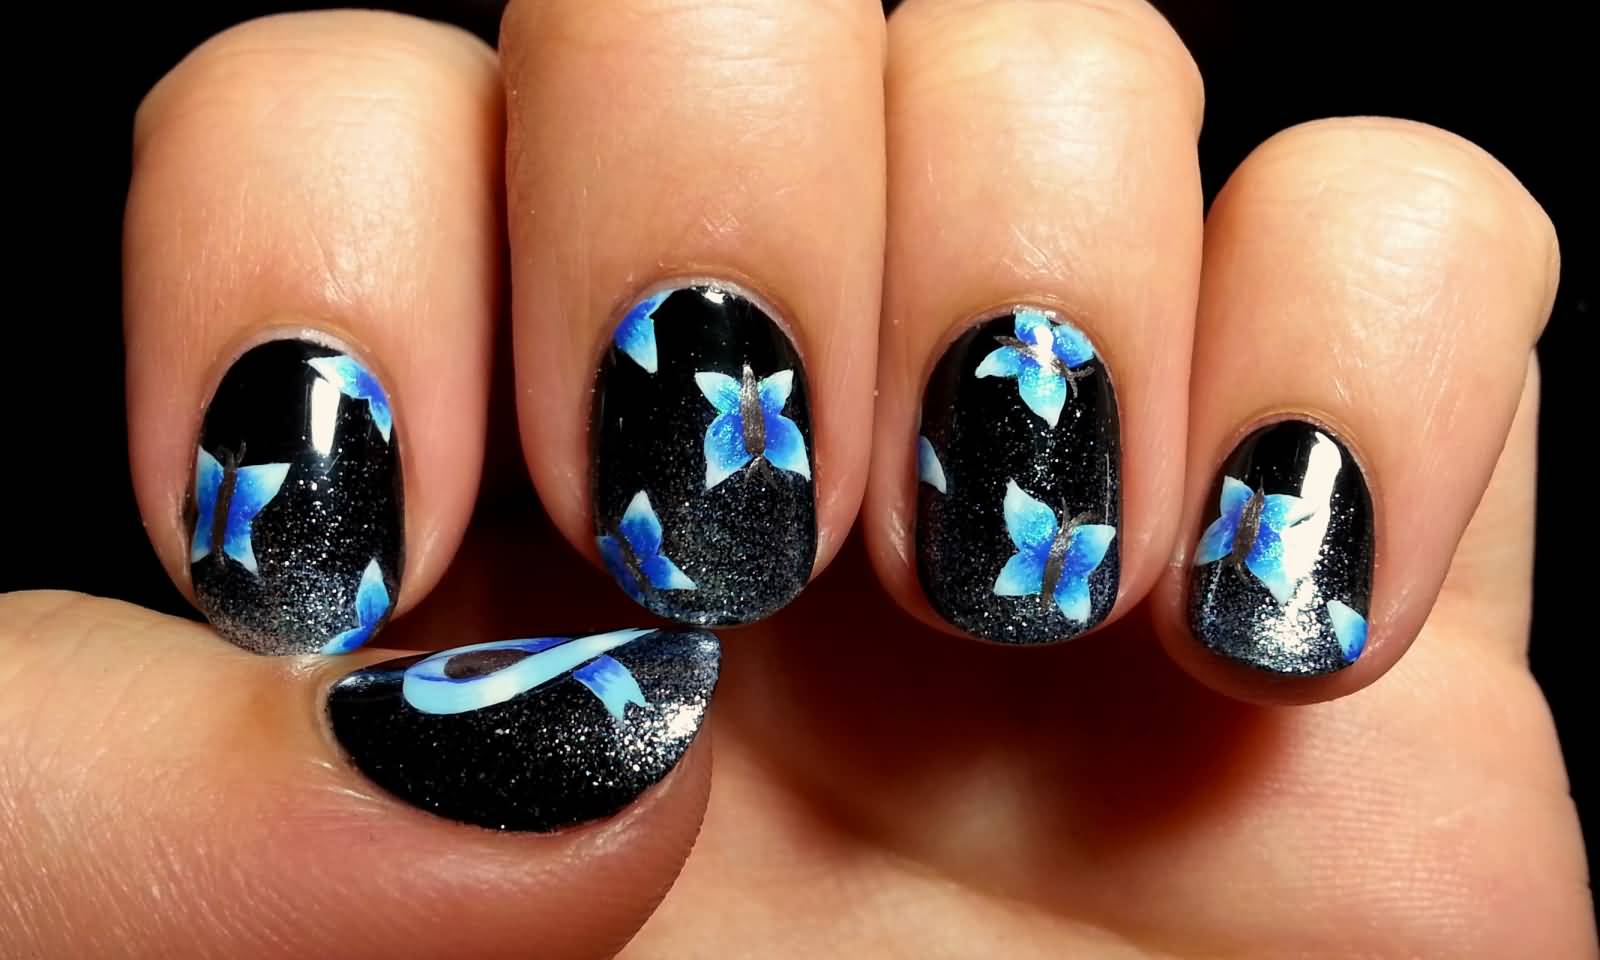 Black Nails With Blue Butterflies Nail Art Design Idea